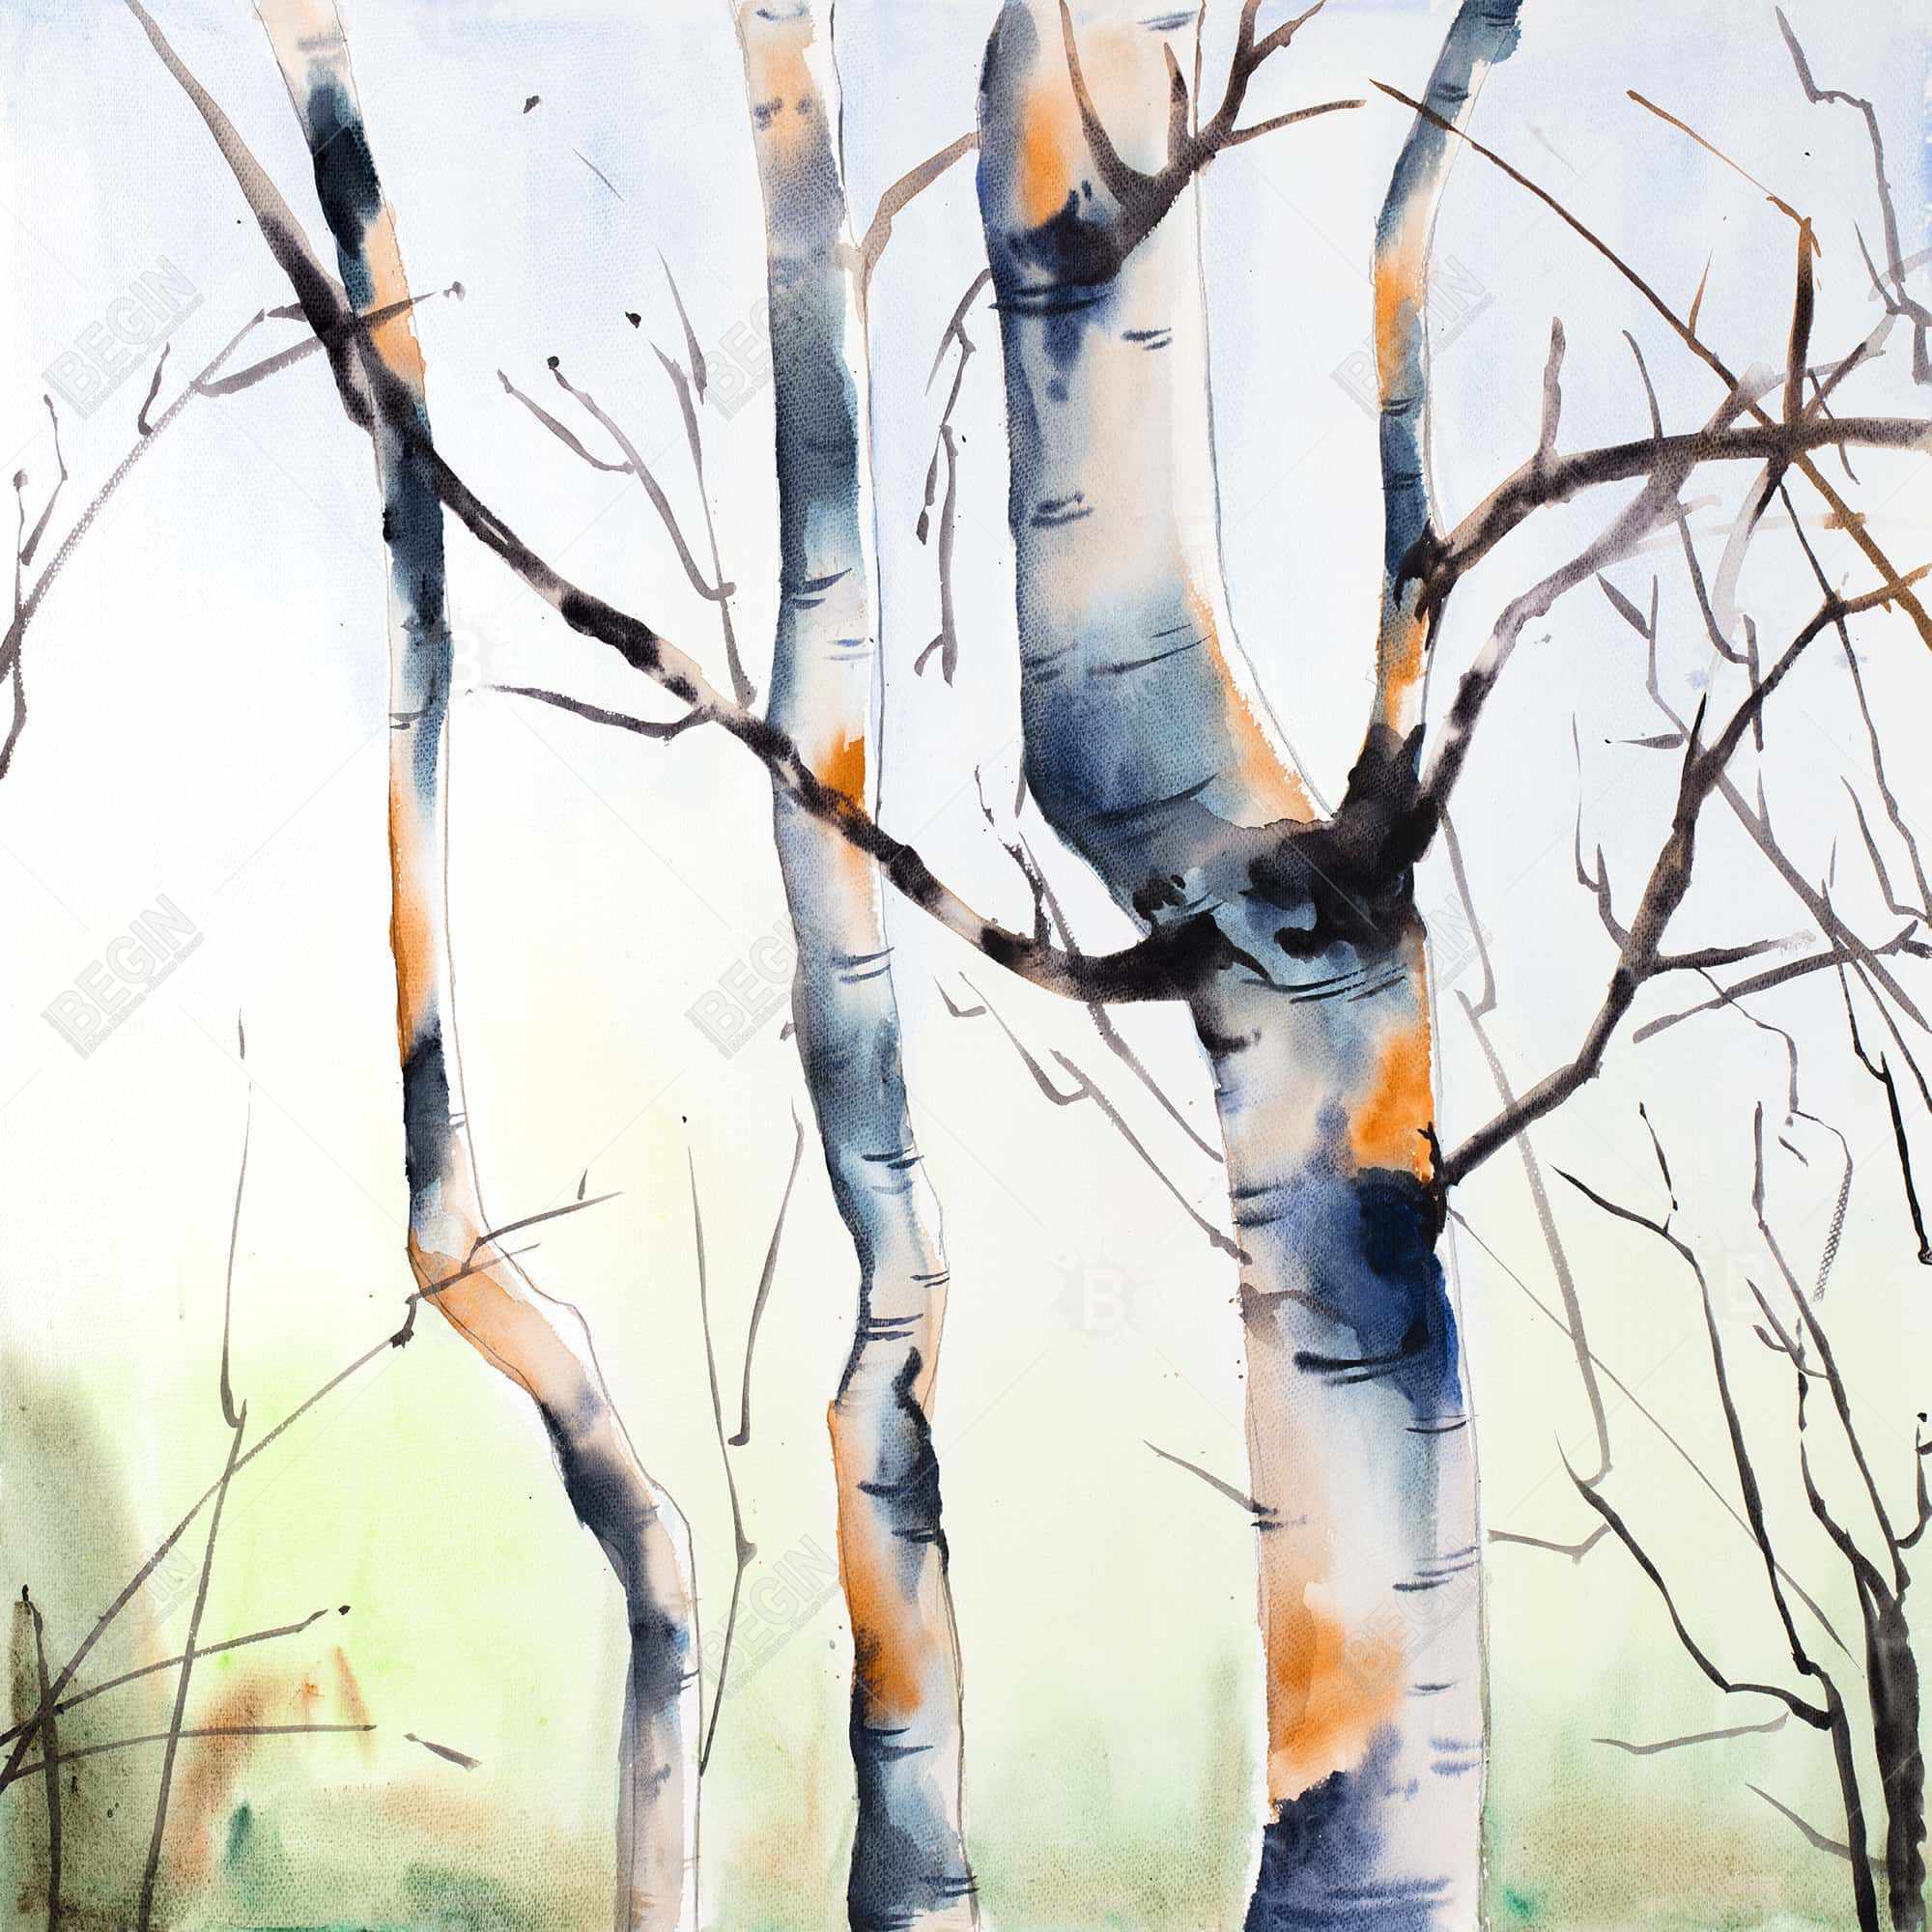 Three small birch trees